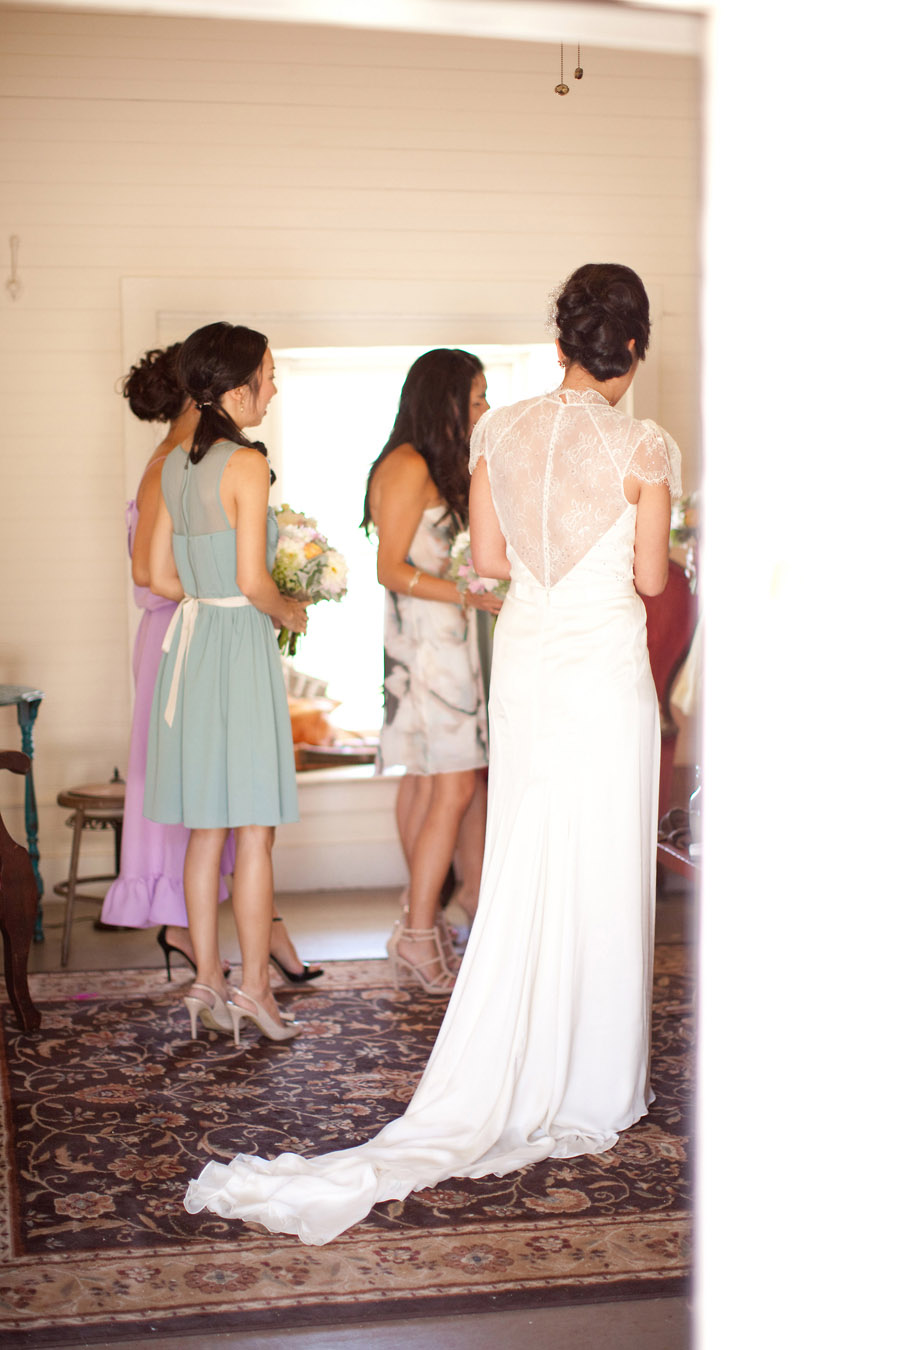 The brides elegant gown as she talks to her bridesmaids at Santa Margarita Ranch.